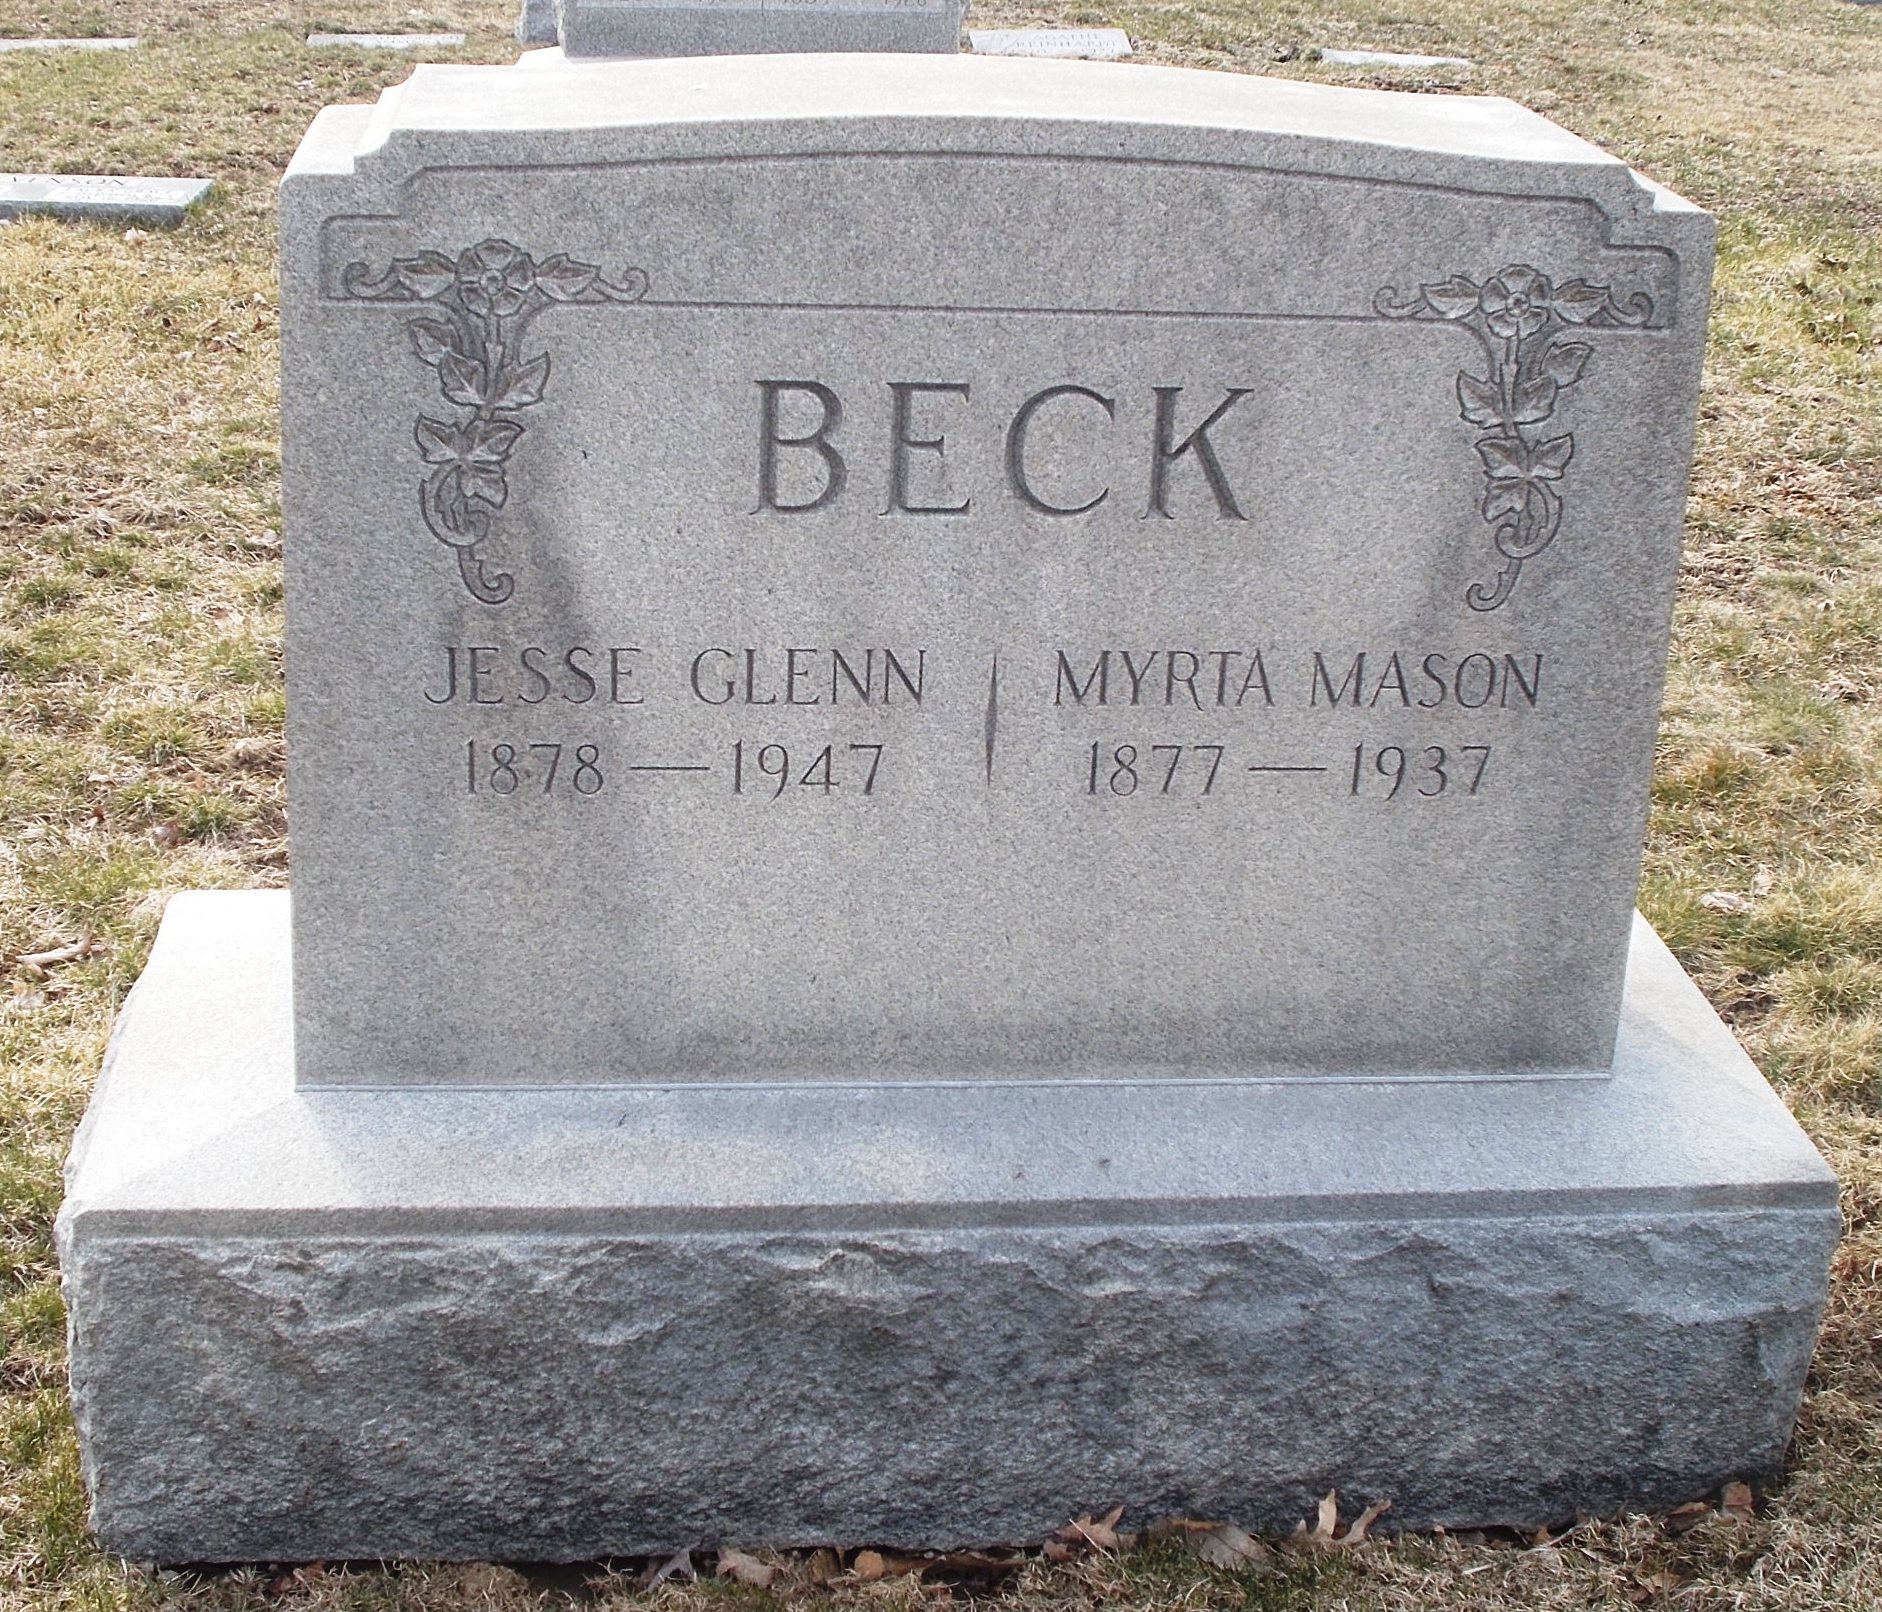 Jesse Glenn Beck